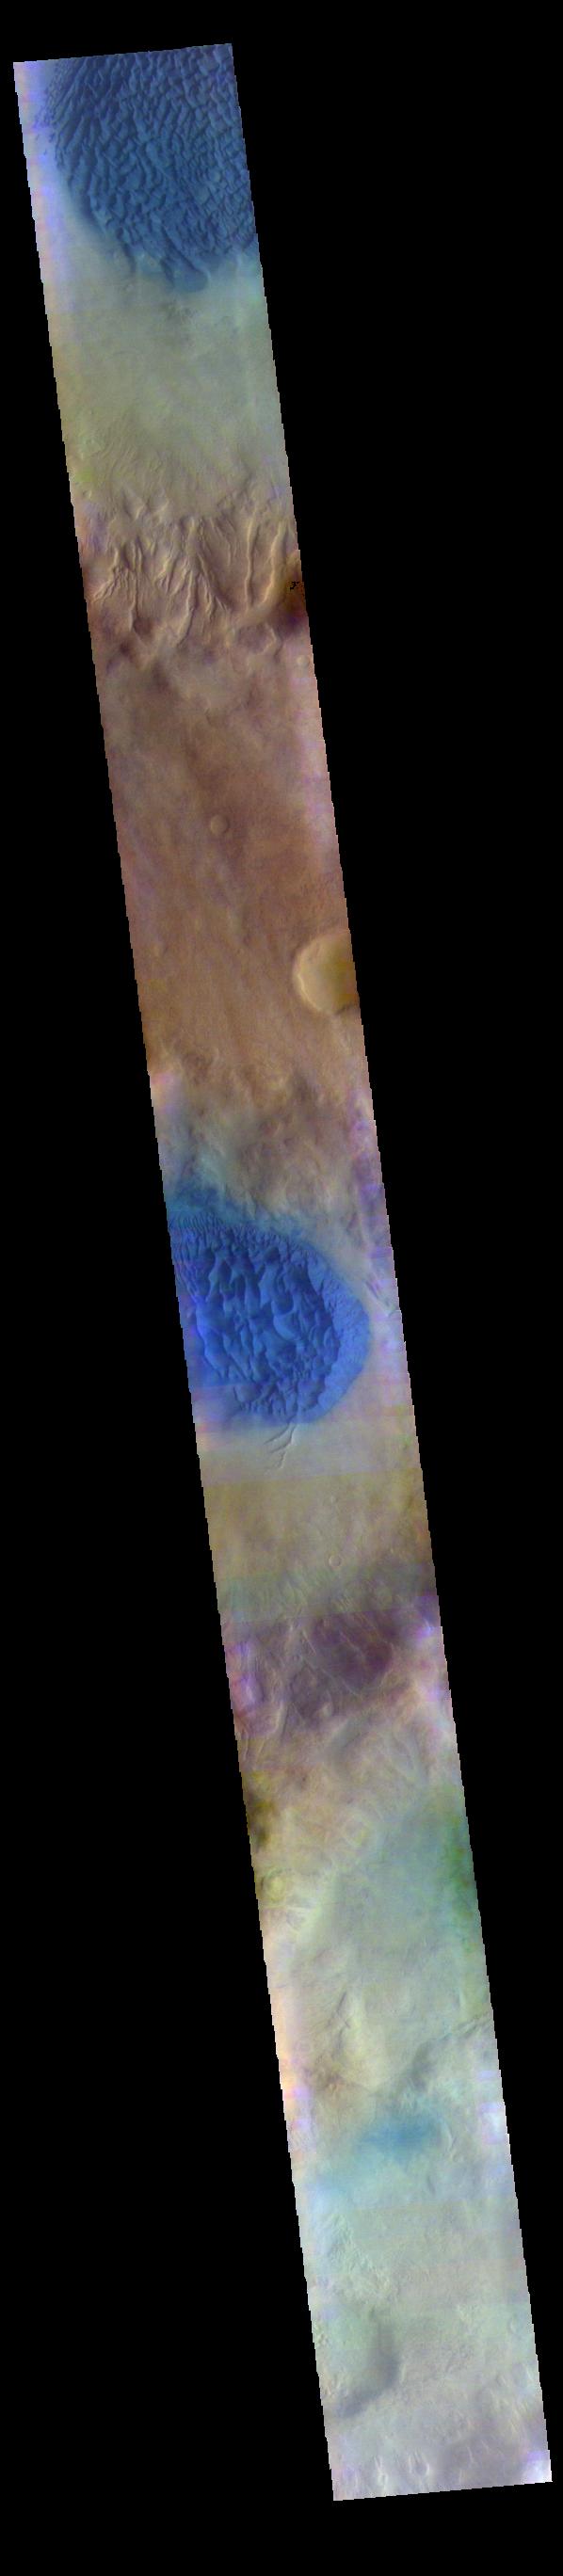 PIA24059: Noachis Terra Crater Dunes - False Color